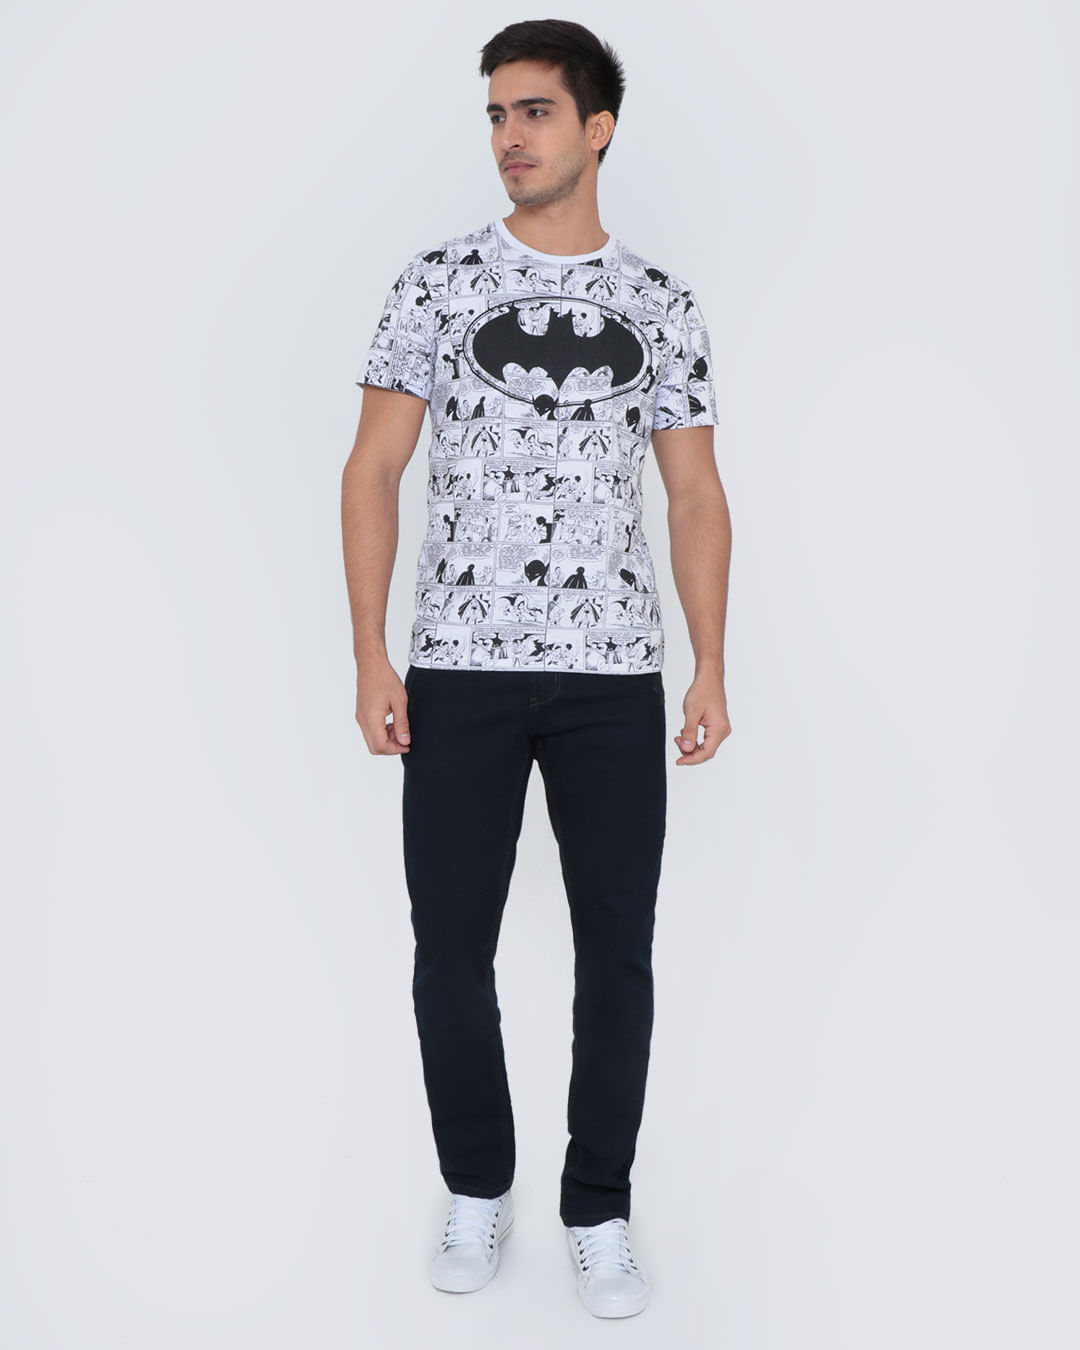 Camiseta-Trw121112-Batman-Full-M---Branco-Outros